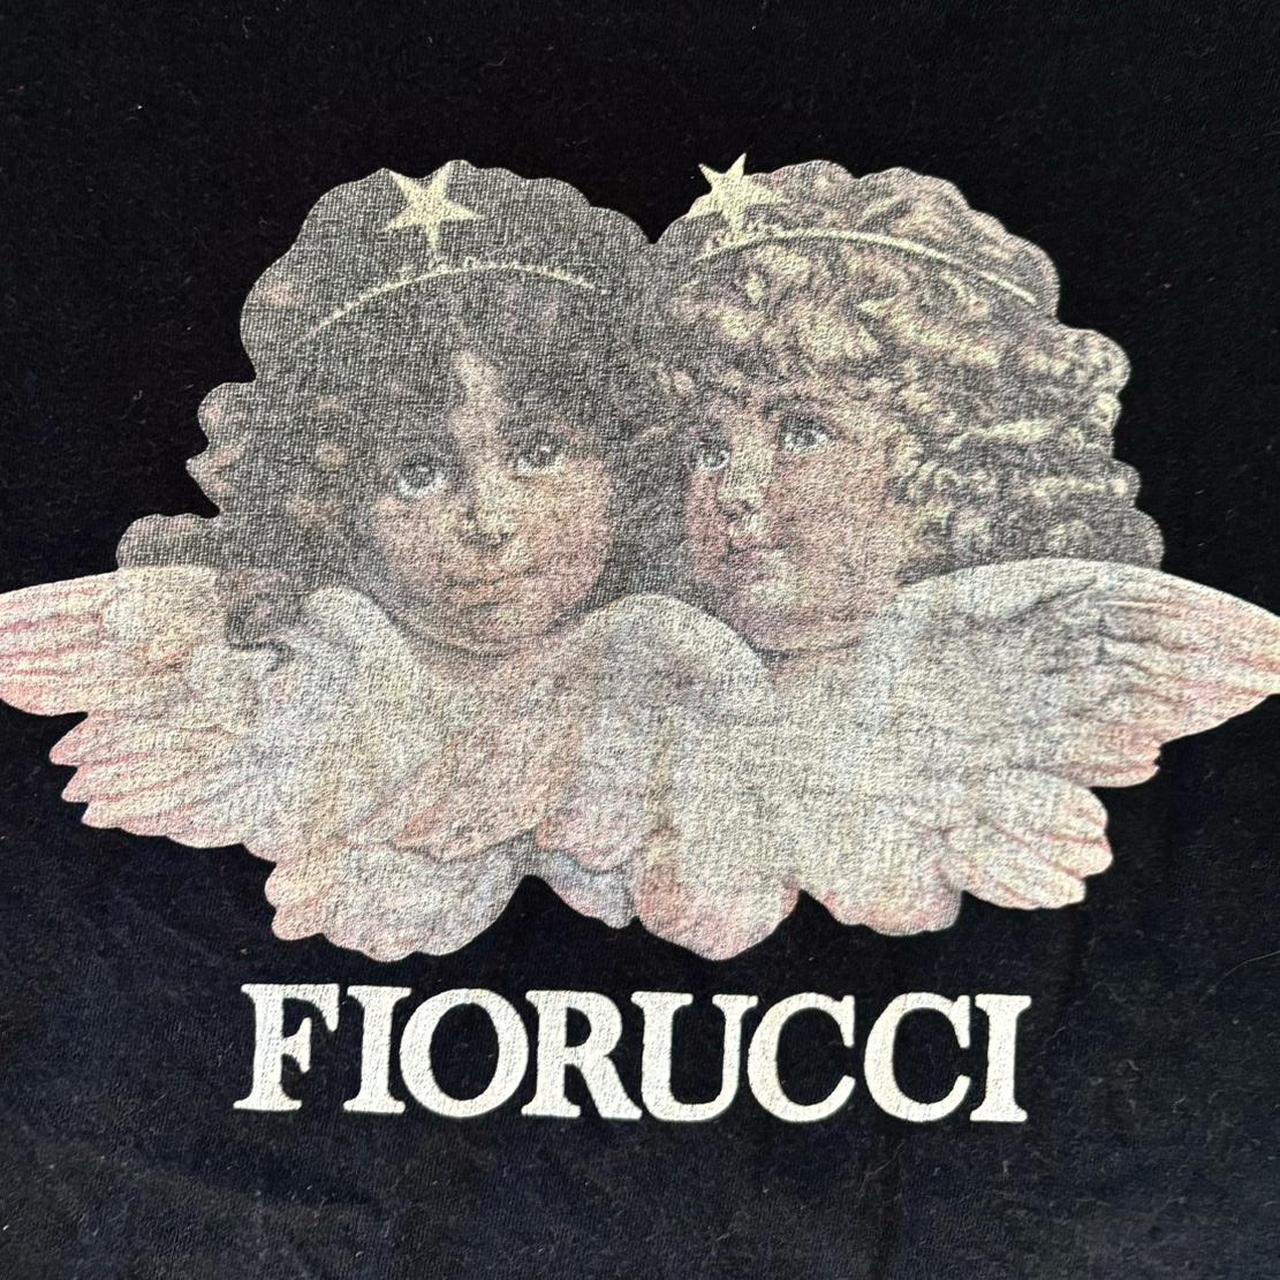 Fiorucci Women's Black Crop-top